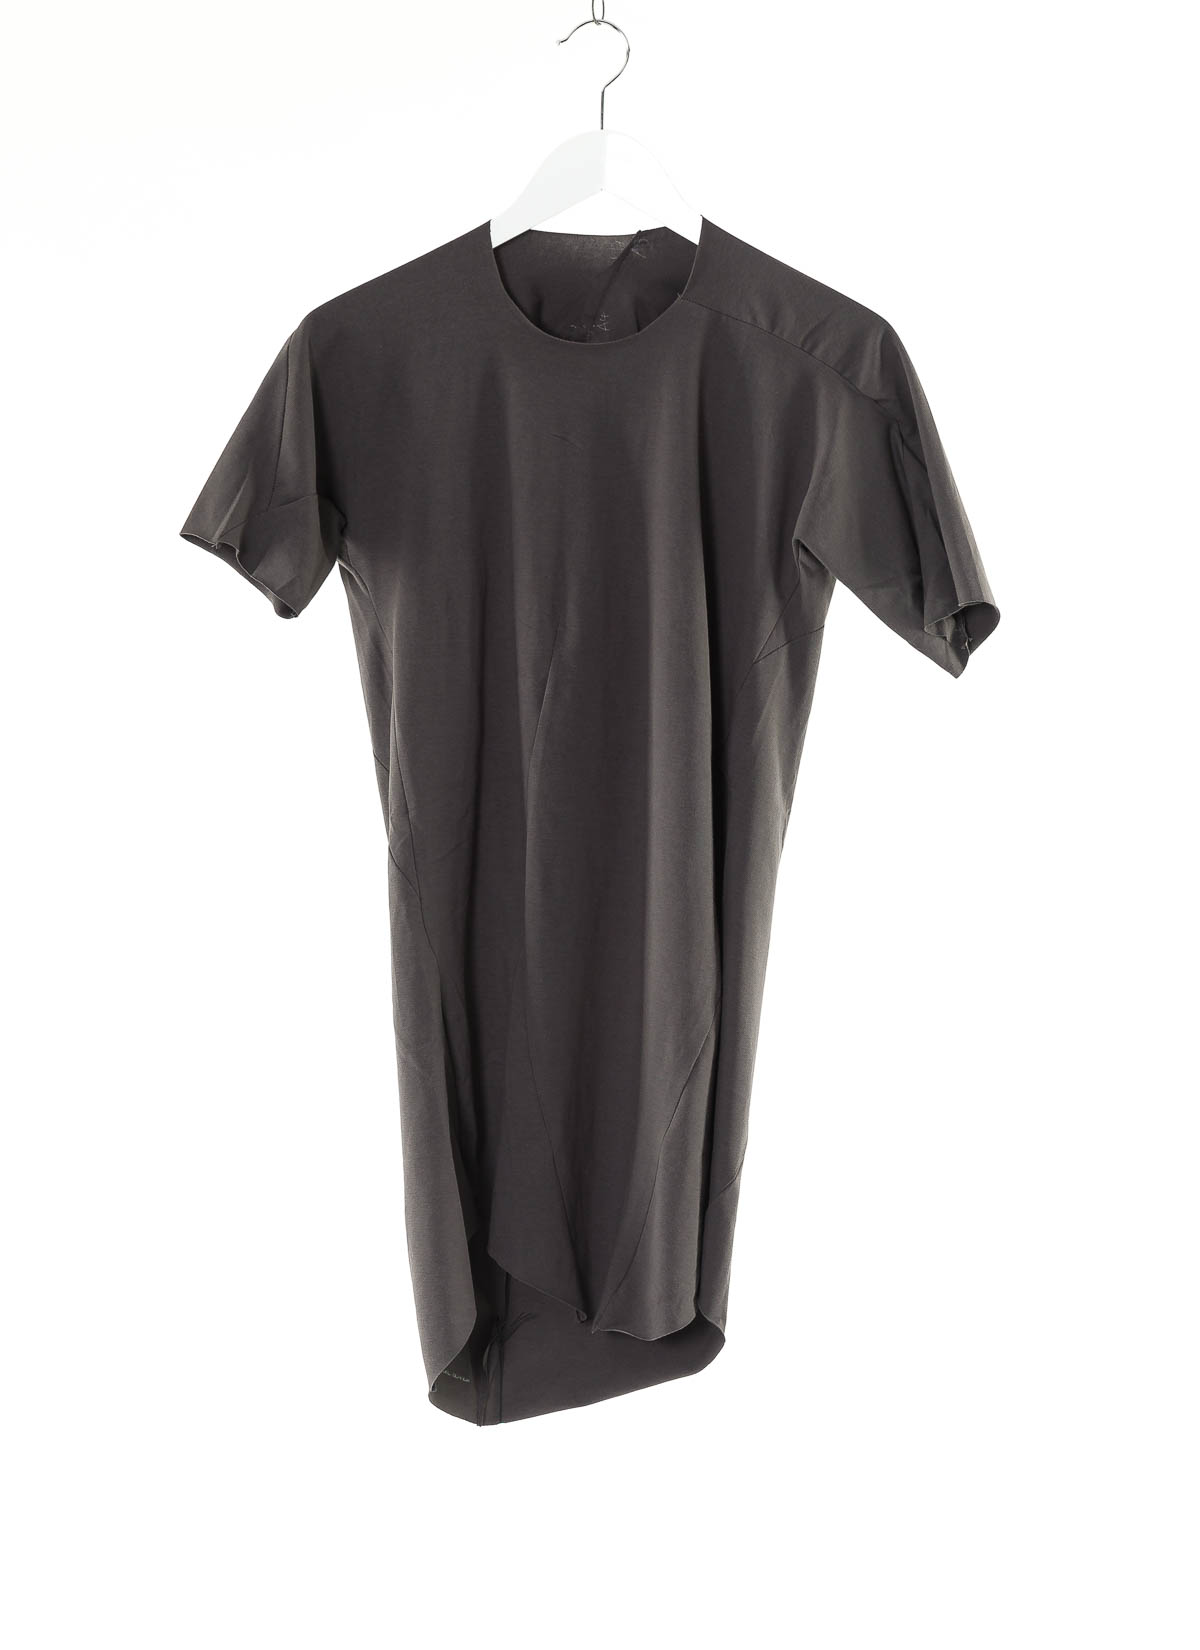 hide-m | LEON EMANUEL BLANCK Distortion Curved T-Shirt, grey cotton